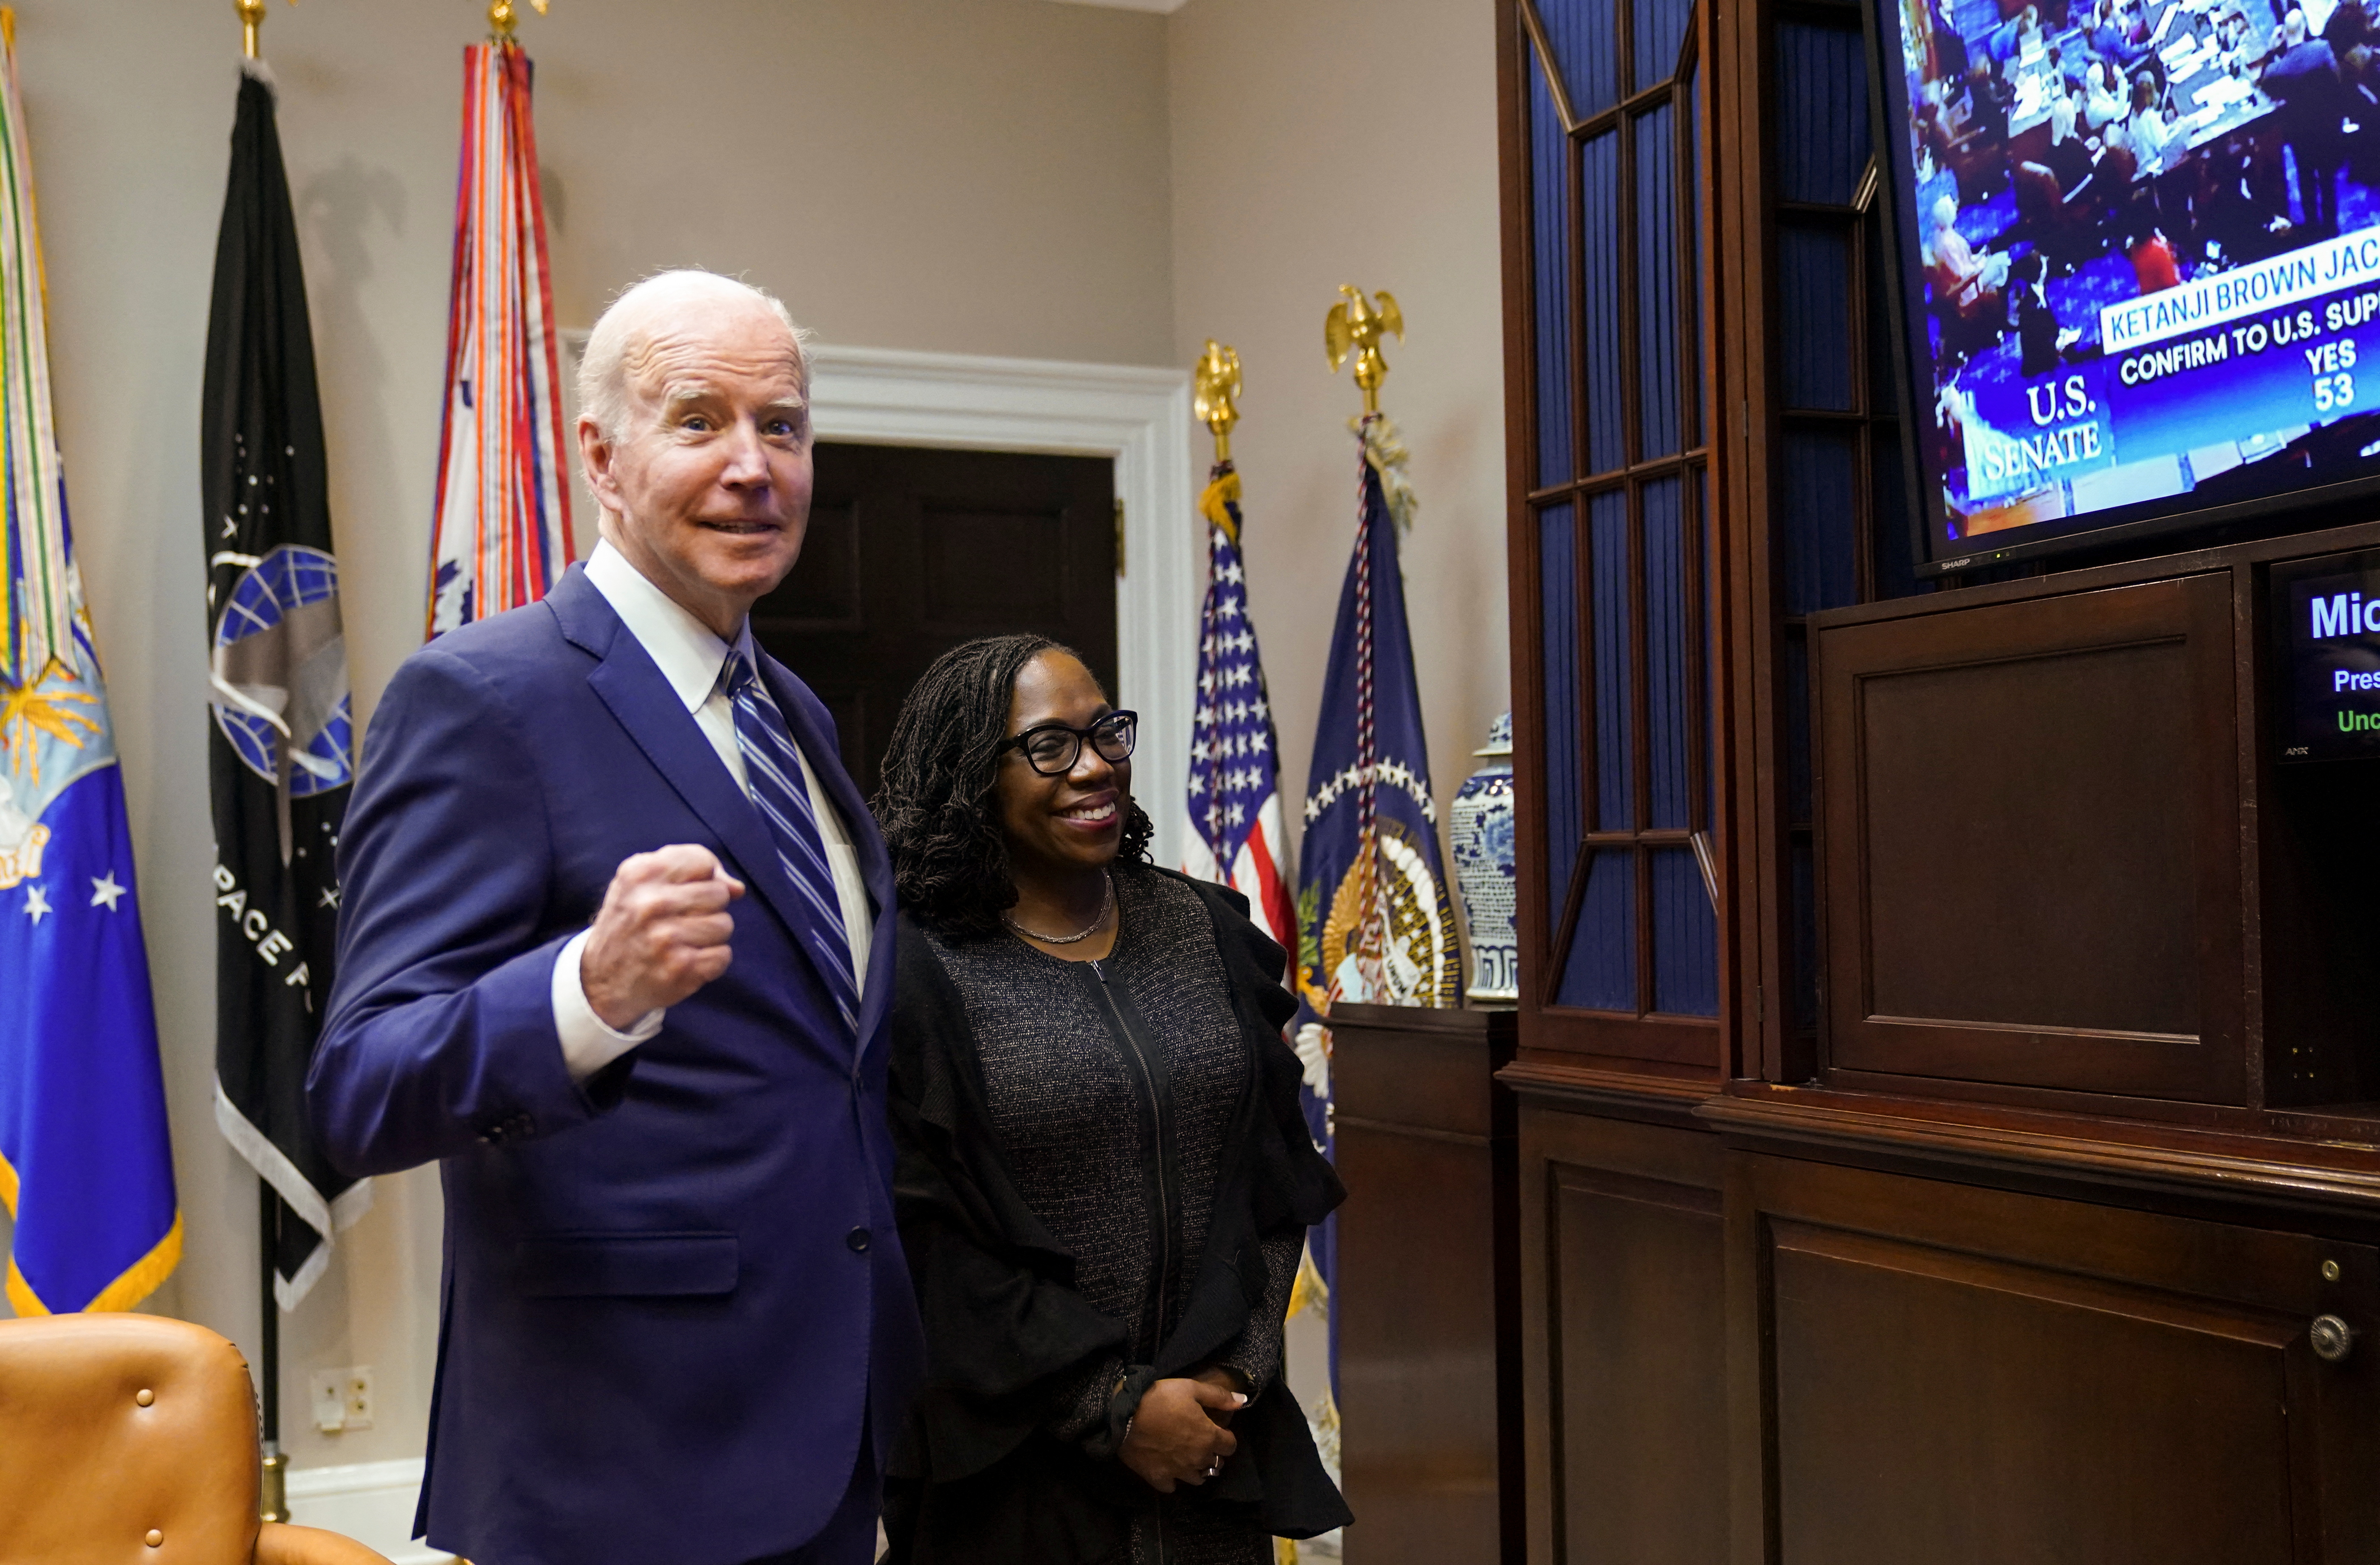 U.S. President Joe Biden and Judge Ketanji Brown Jackson watch as Senate votes to confirm Jackson's nomination to the U.S. Supreme Court, from the White House in Washington